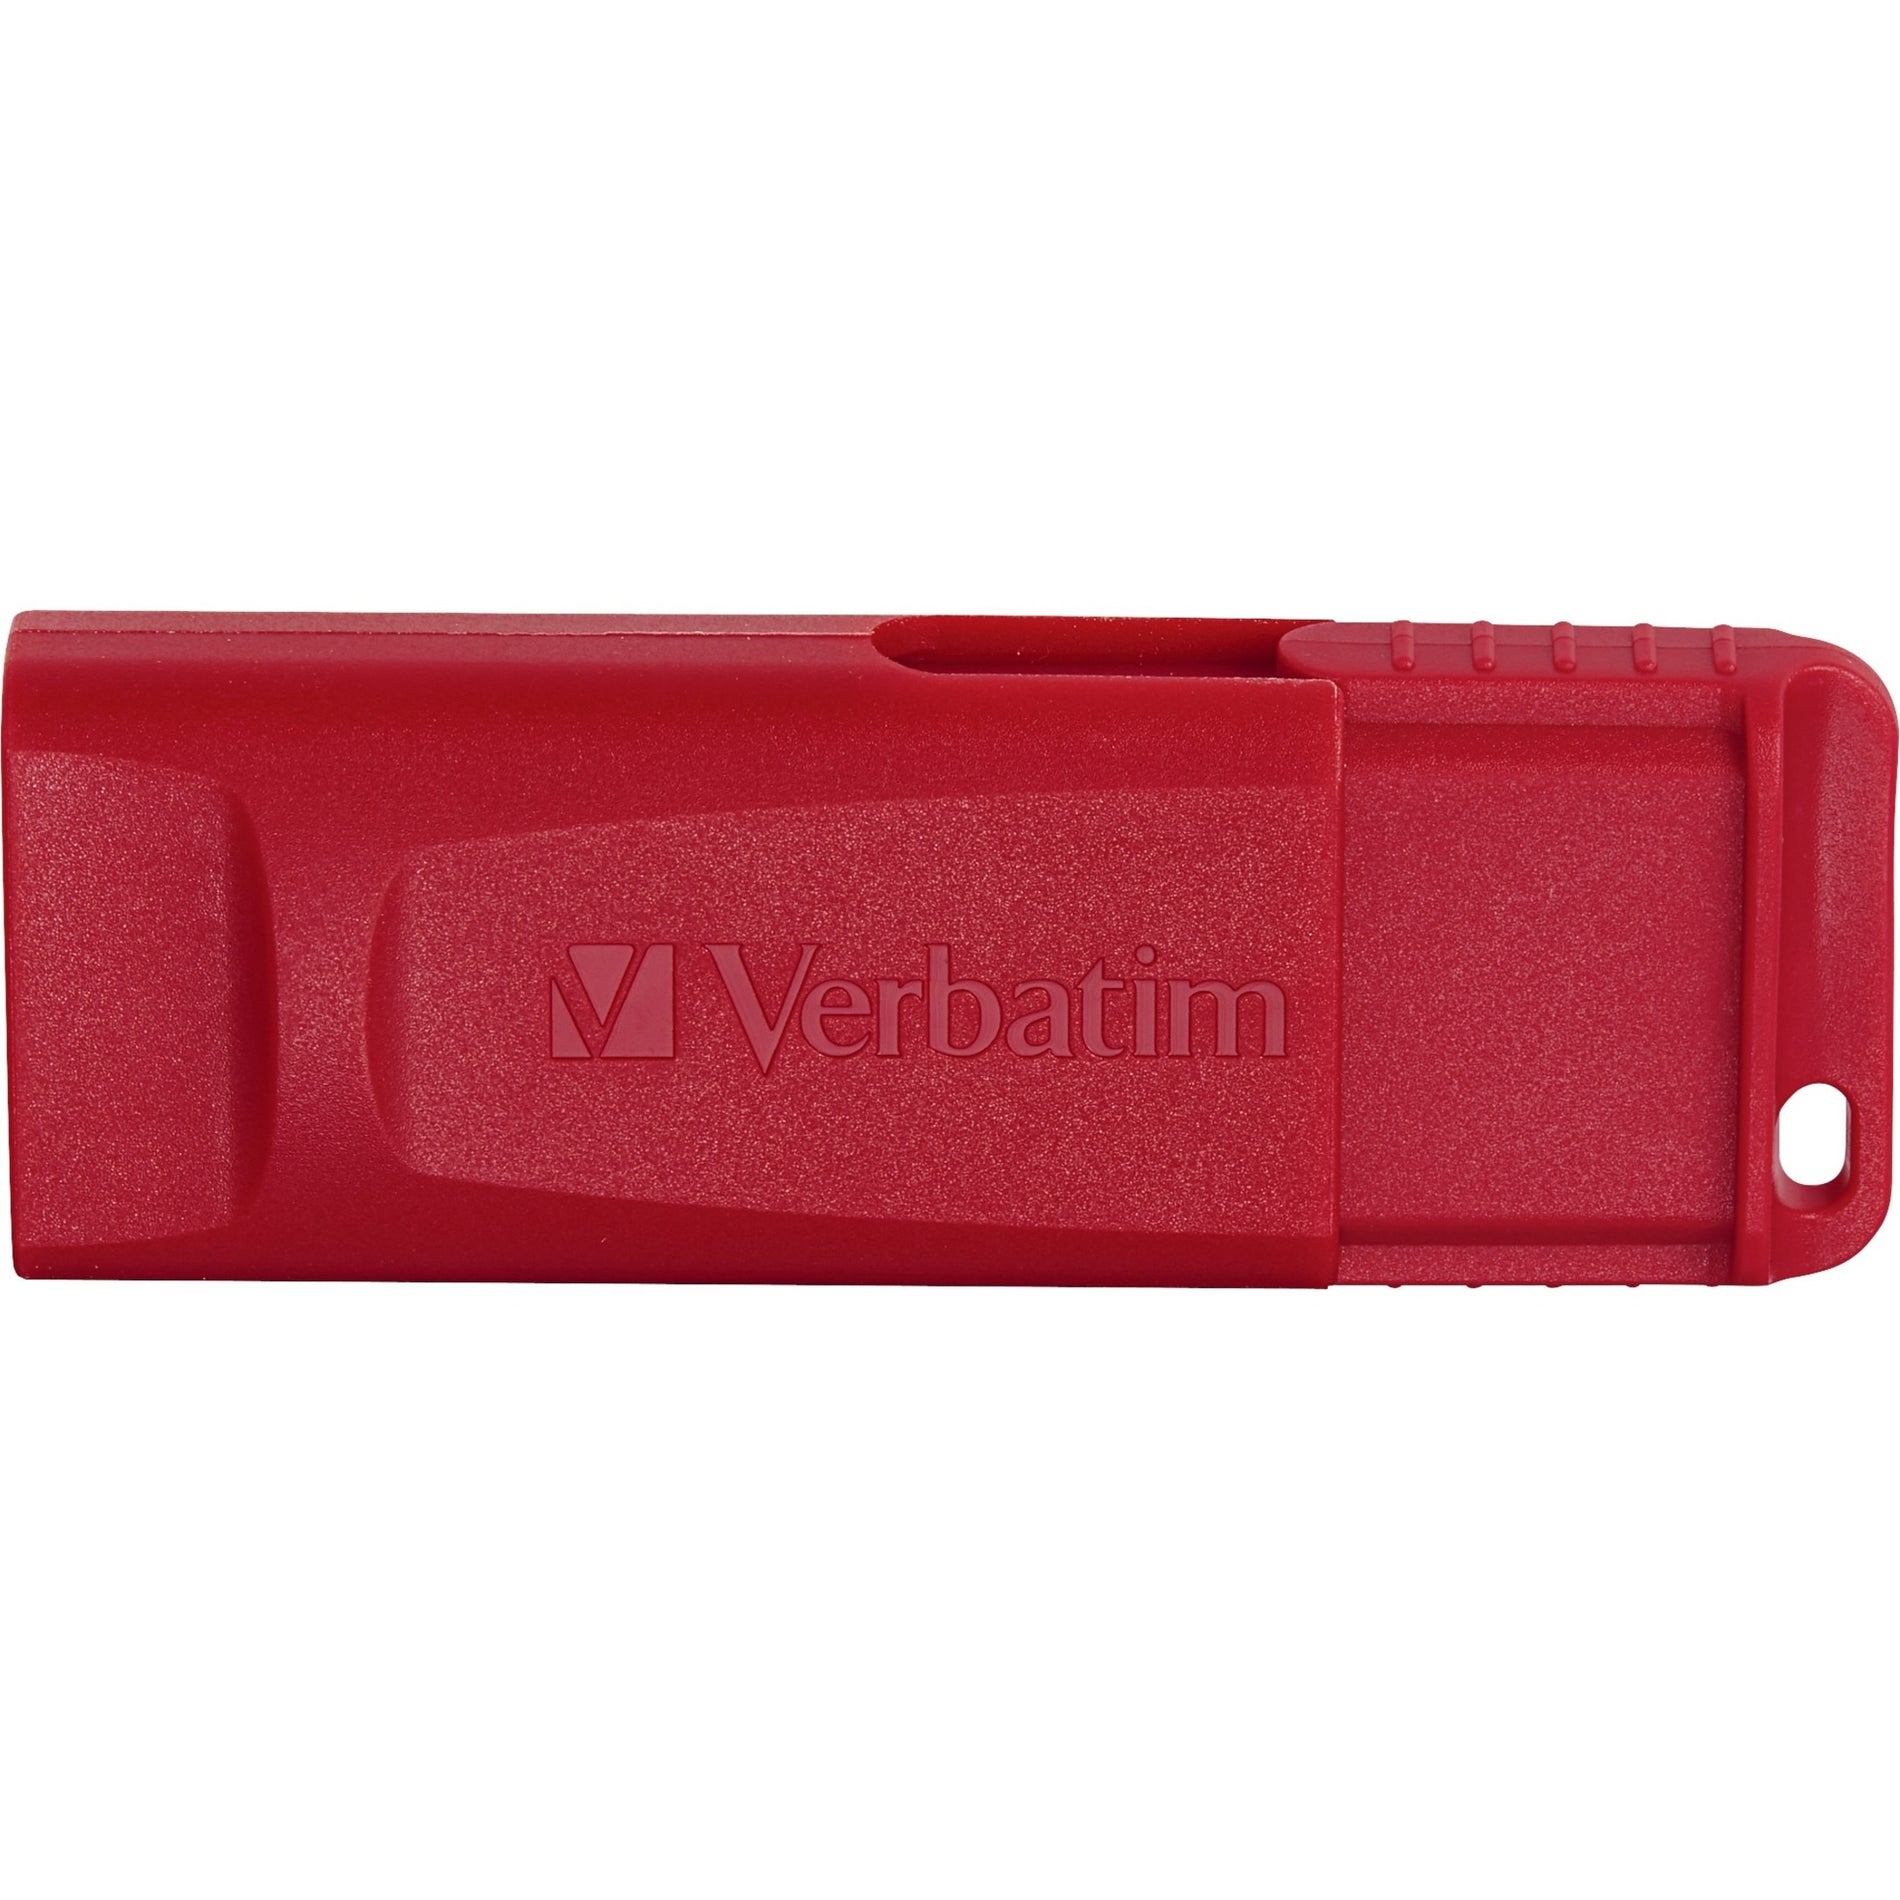 Verbatim 95507 Store 'n' Go 8GB USB Flash Drive, Red - Capless, Retractable, Antimicrobial